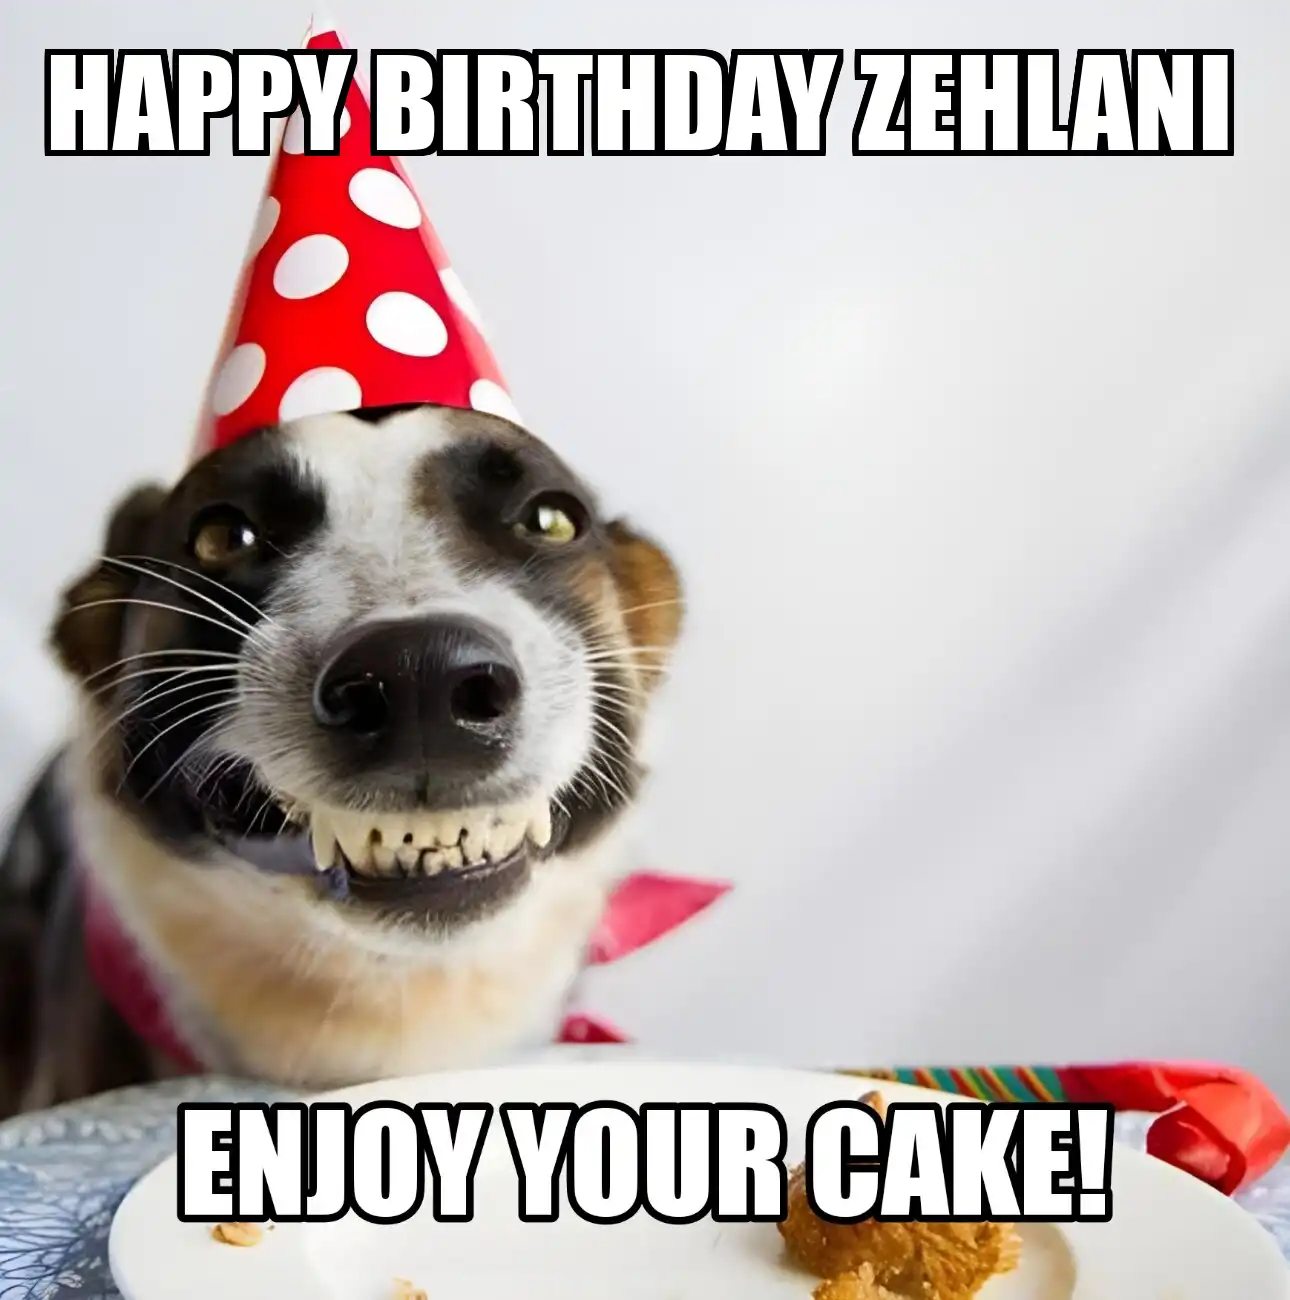 Happy Birthday Zehlani Enjoy Your Cake Dog Meme